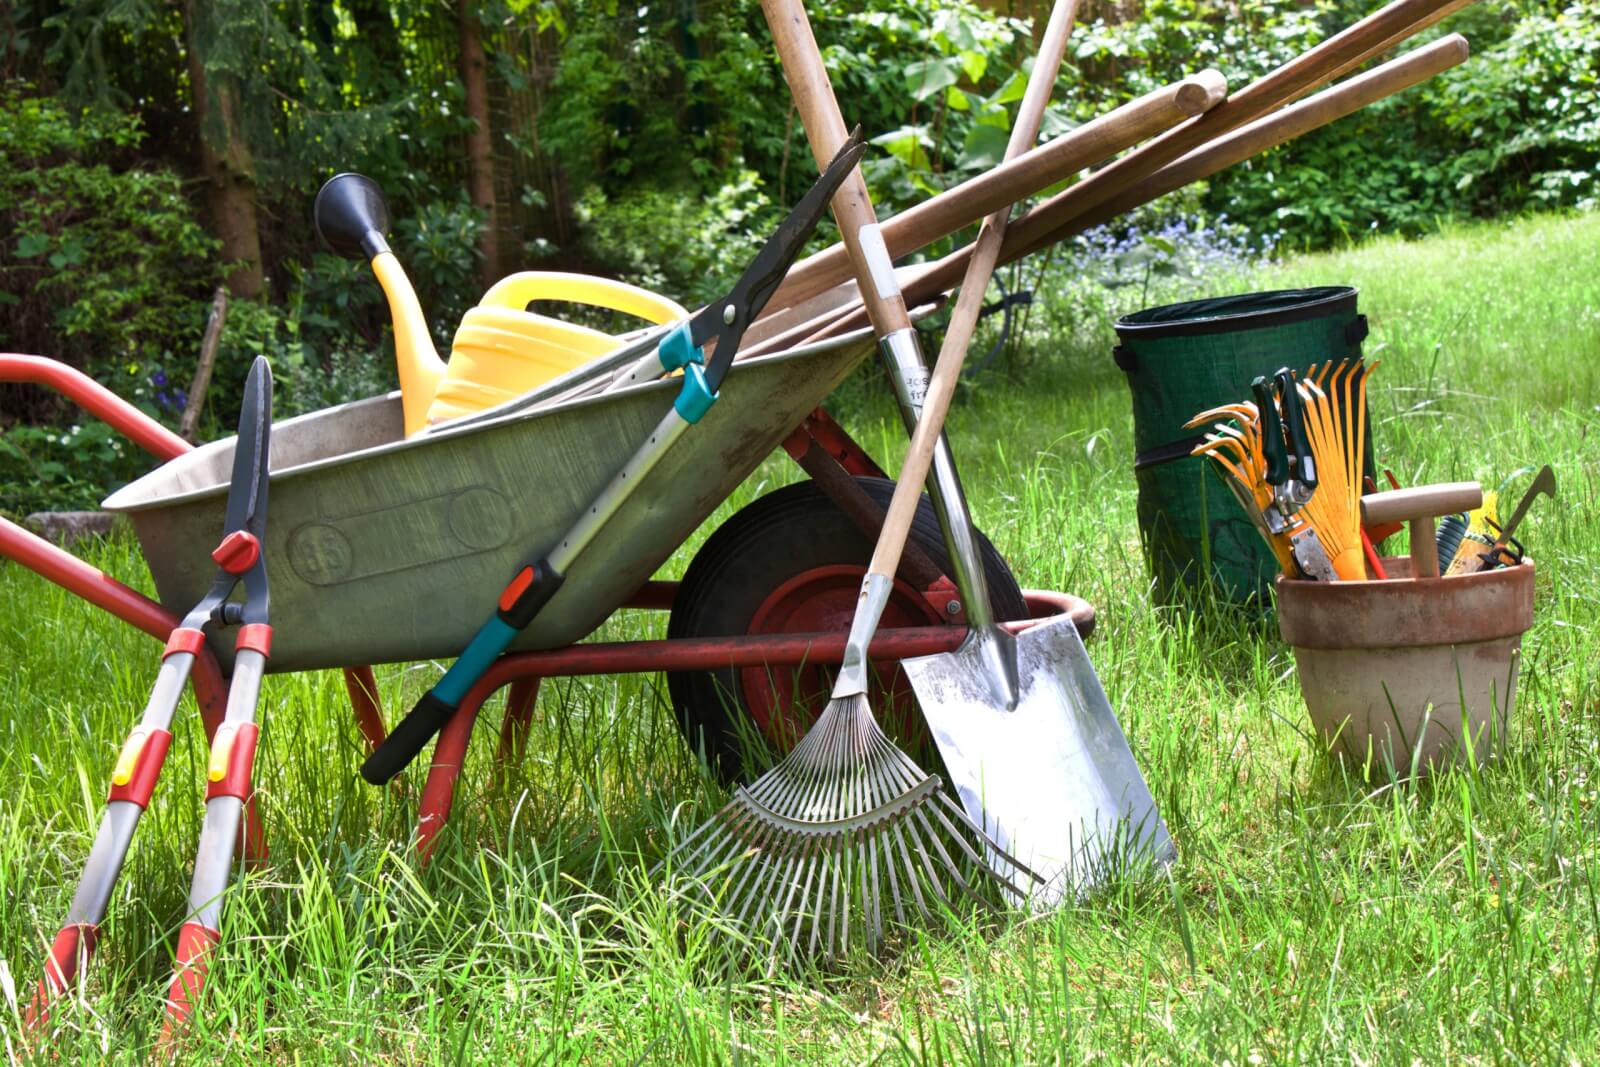 Assortment of garden tools leaning against wheel barrel in backyard